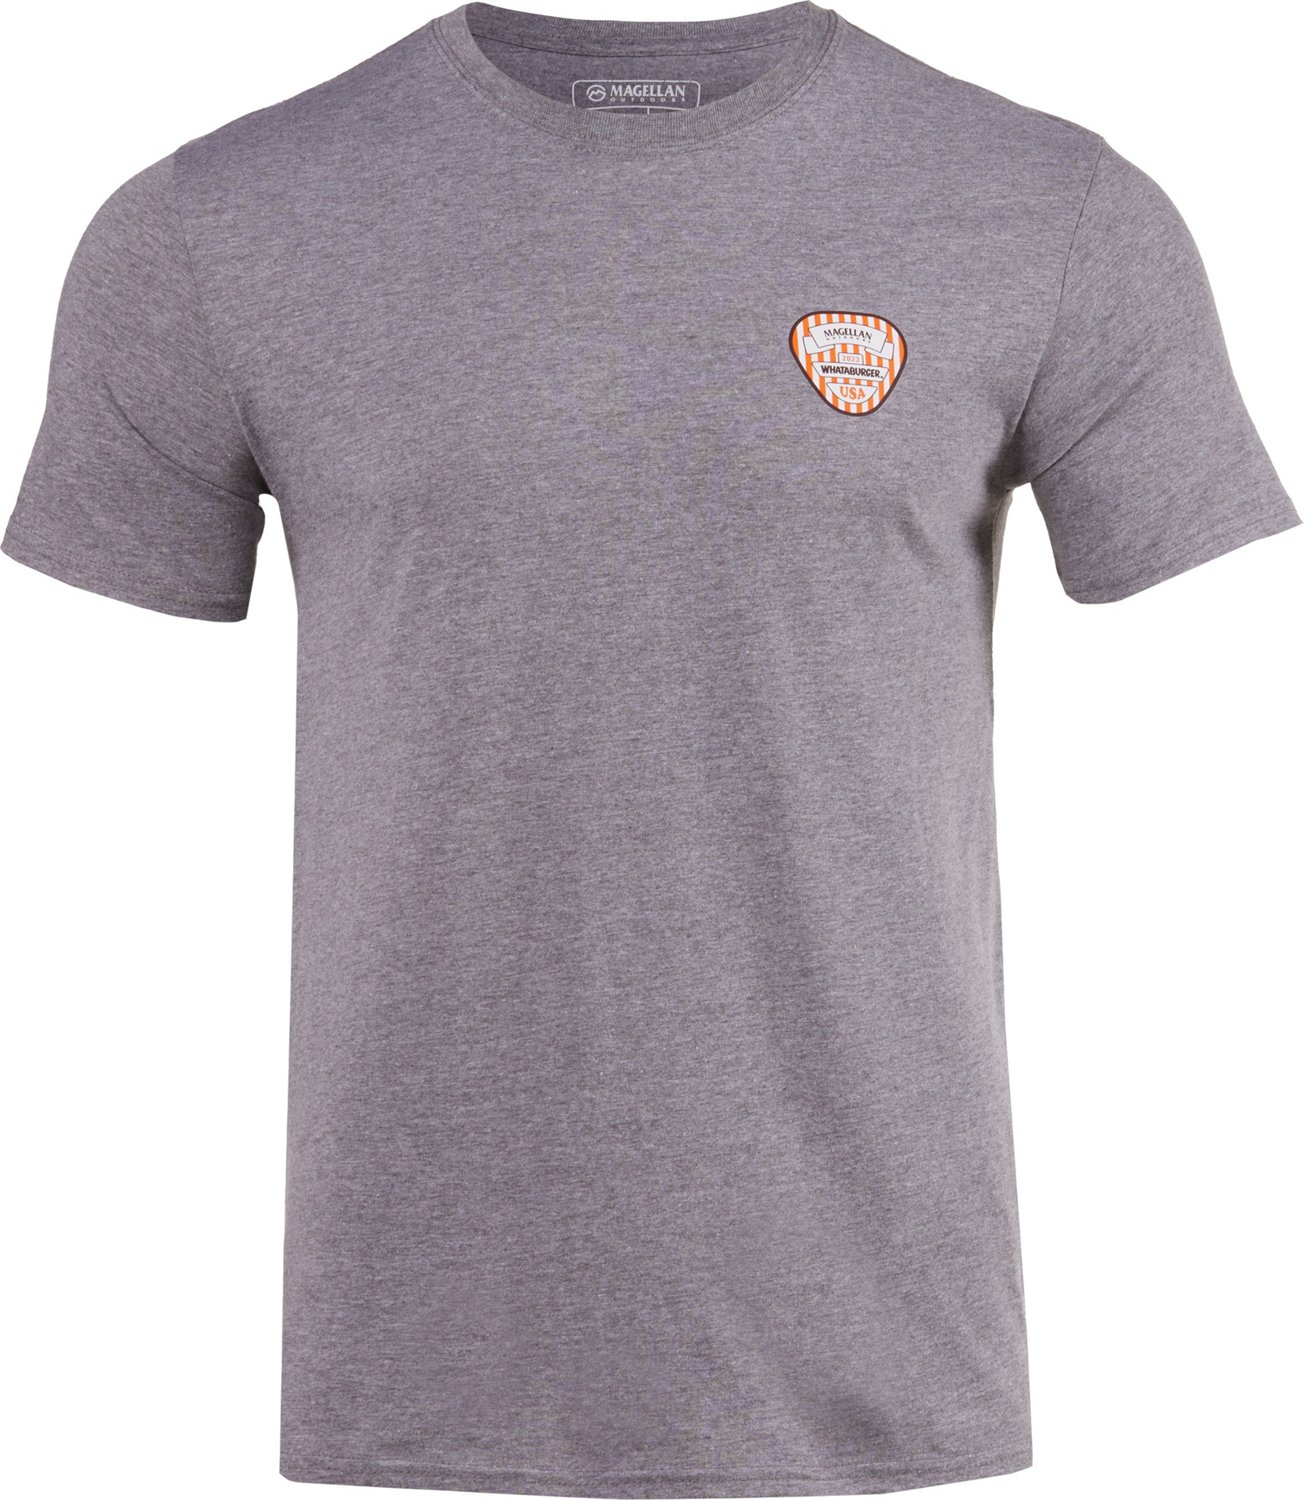 Whataburger Baseball Jersey Shirt Gift For Fans